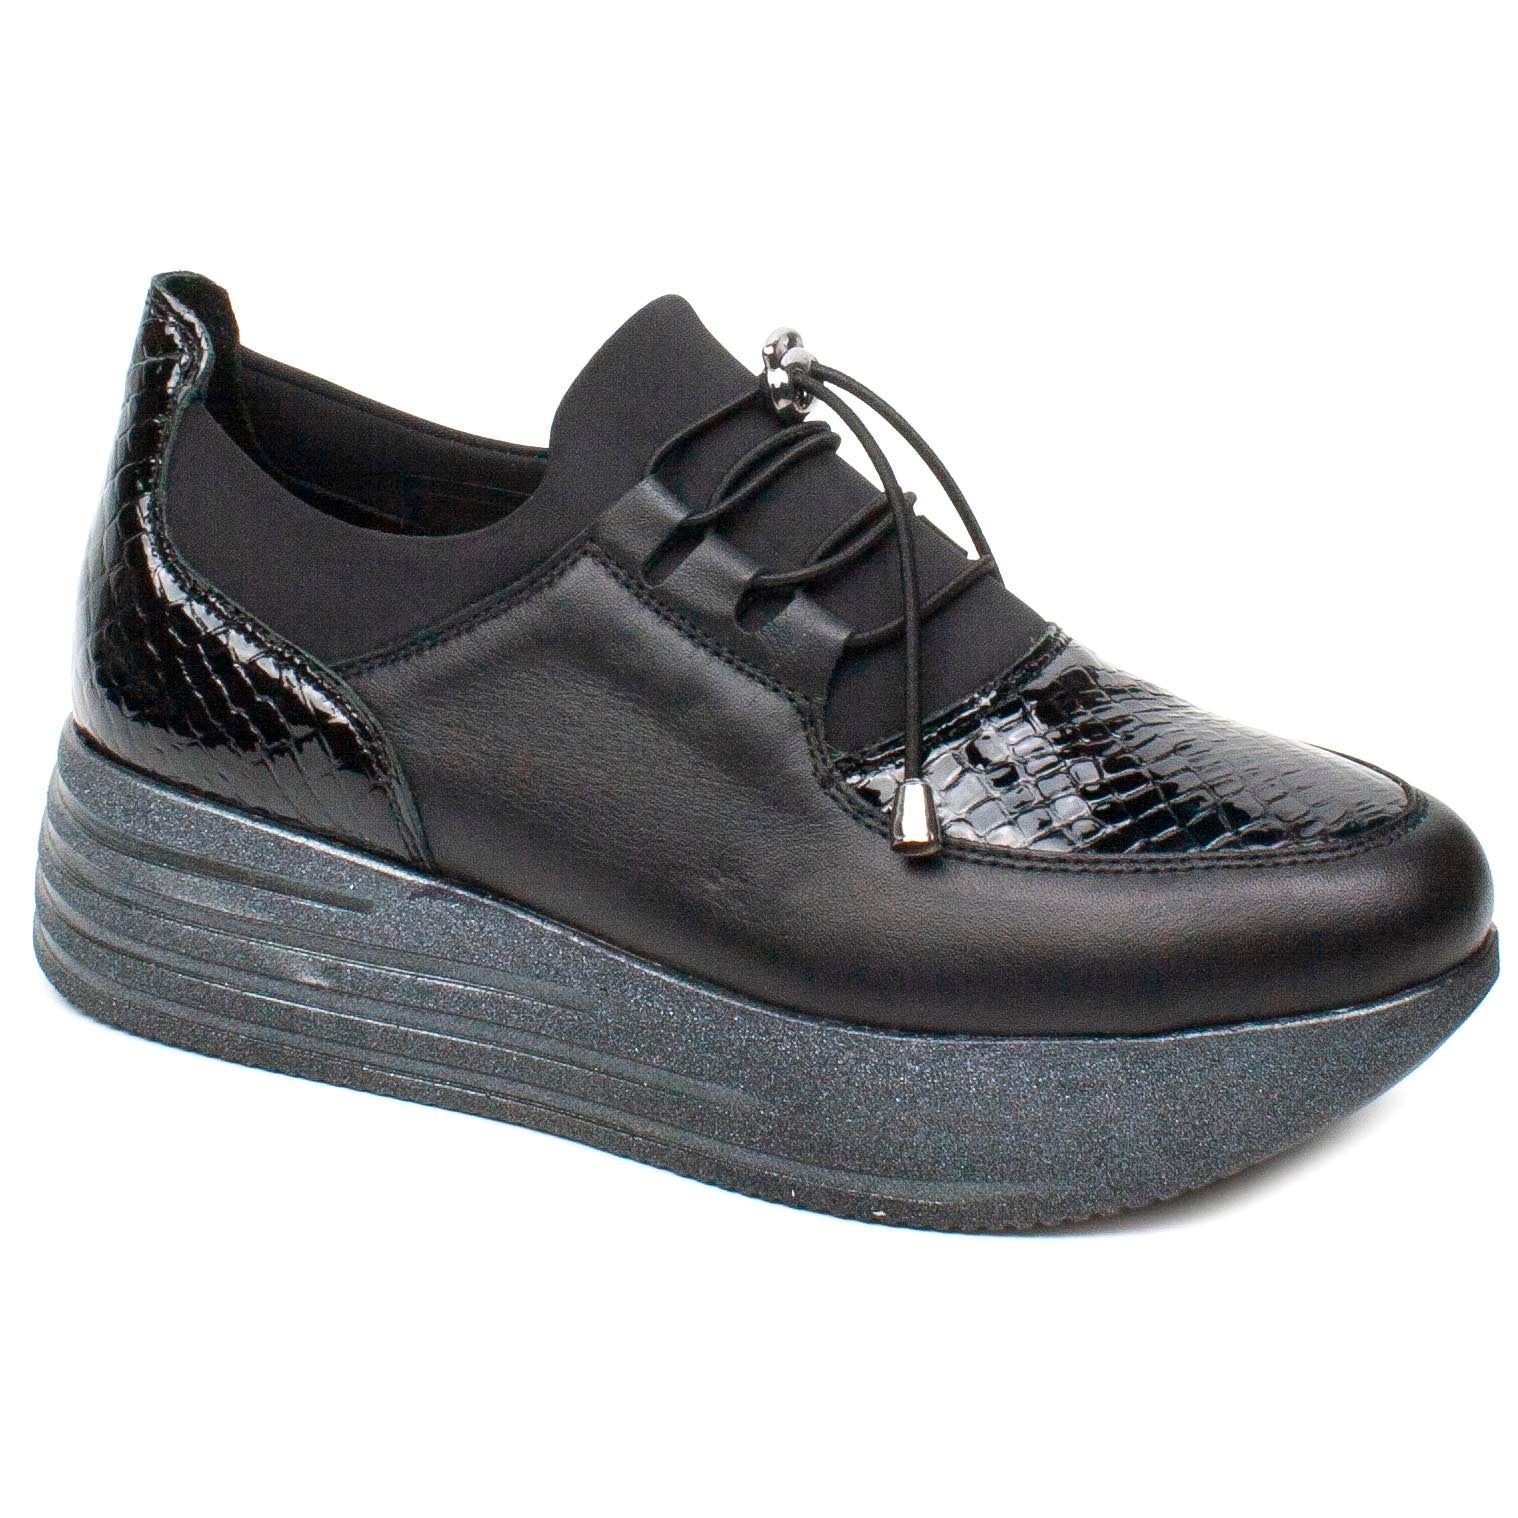 Caspian Pantofi dama 3012(2) negru lac ID1809-NGL